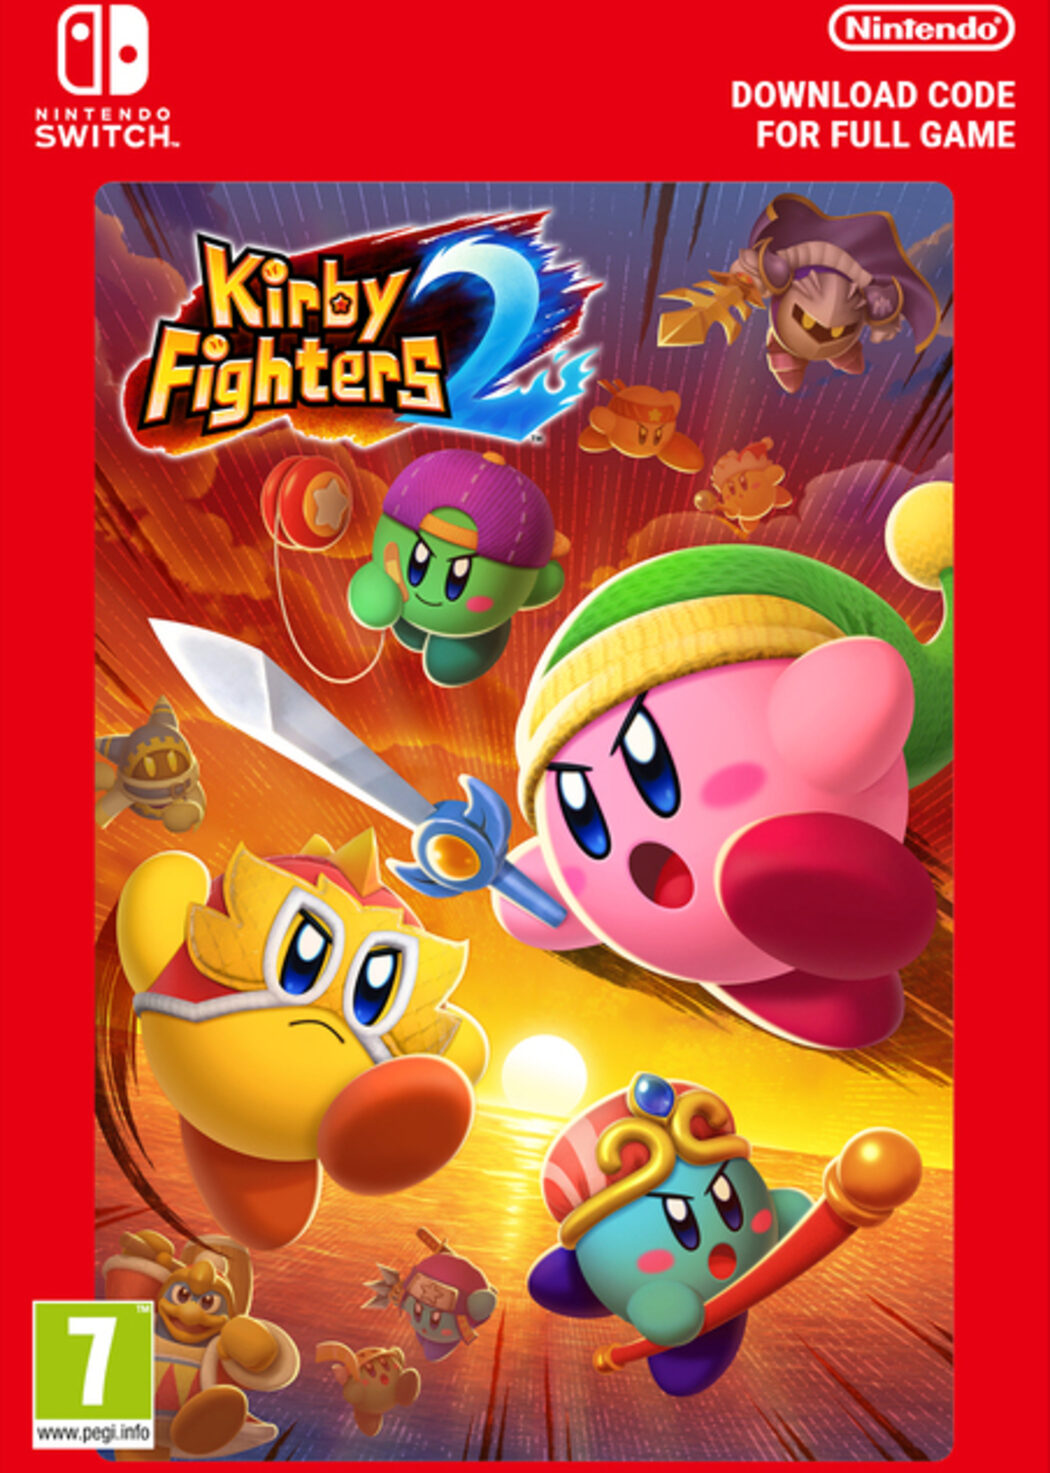 key! Fighters ENEBA price Nintendo Kirby Cheap 2 Buy |